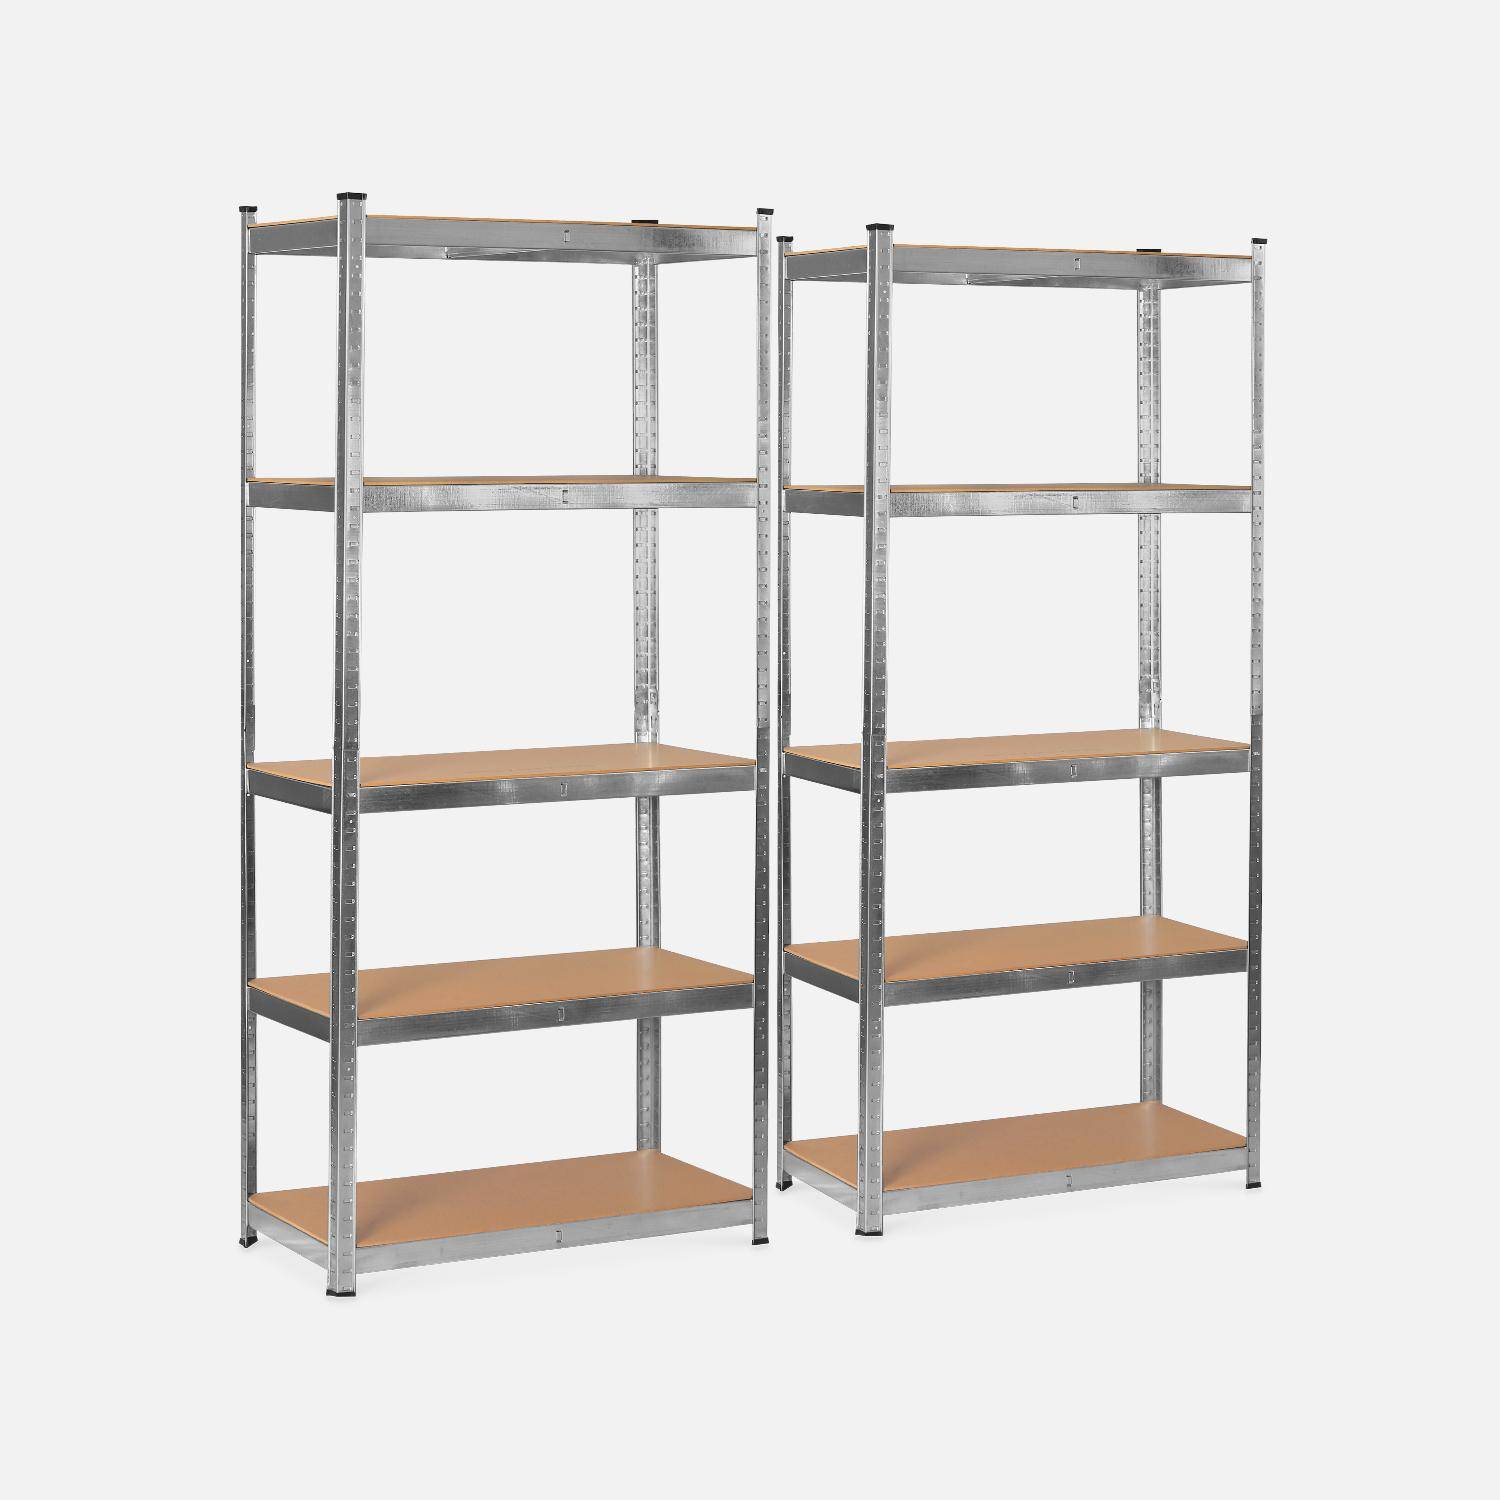 Conjunto de 2 estantes metálicos modulares para cargas pesadas - Modul - con 5 bandejas  Photo1